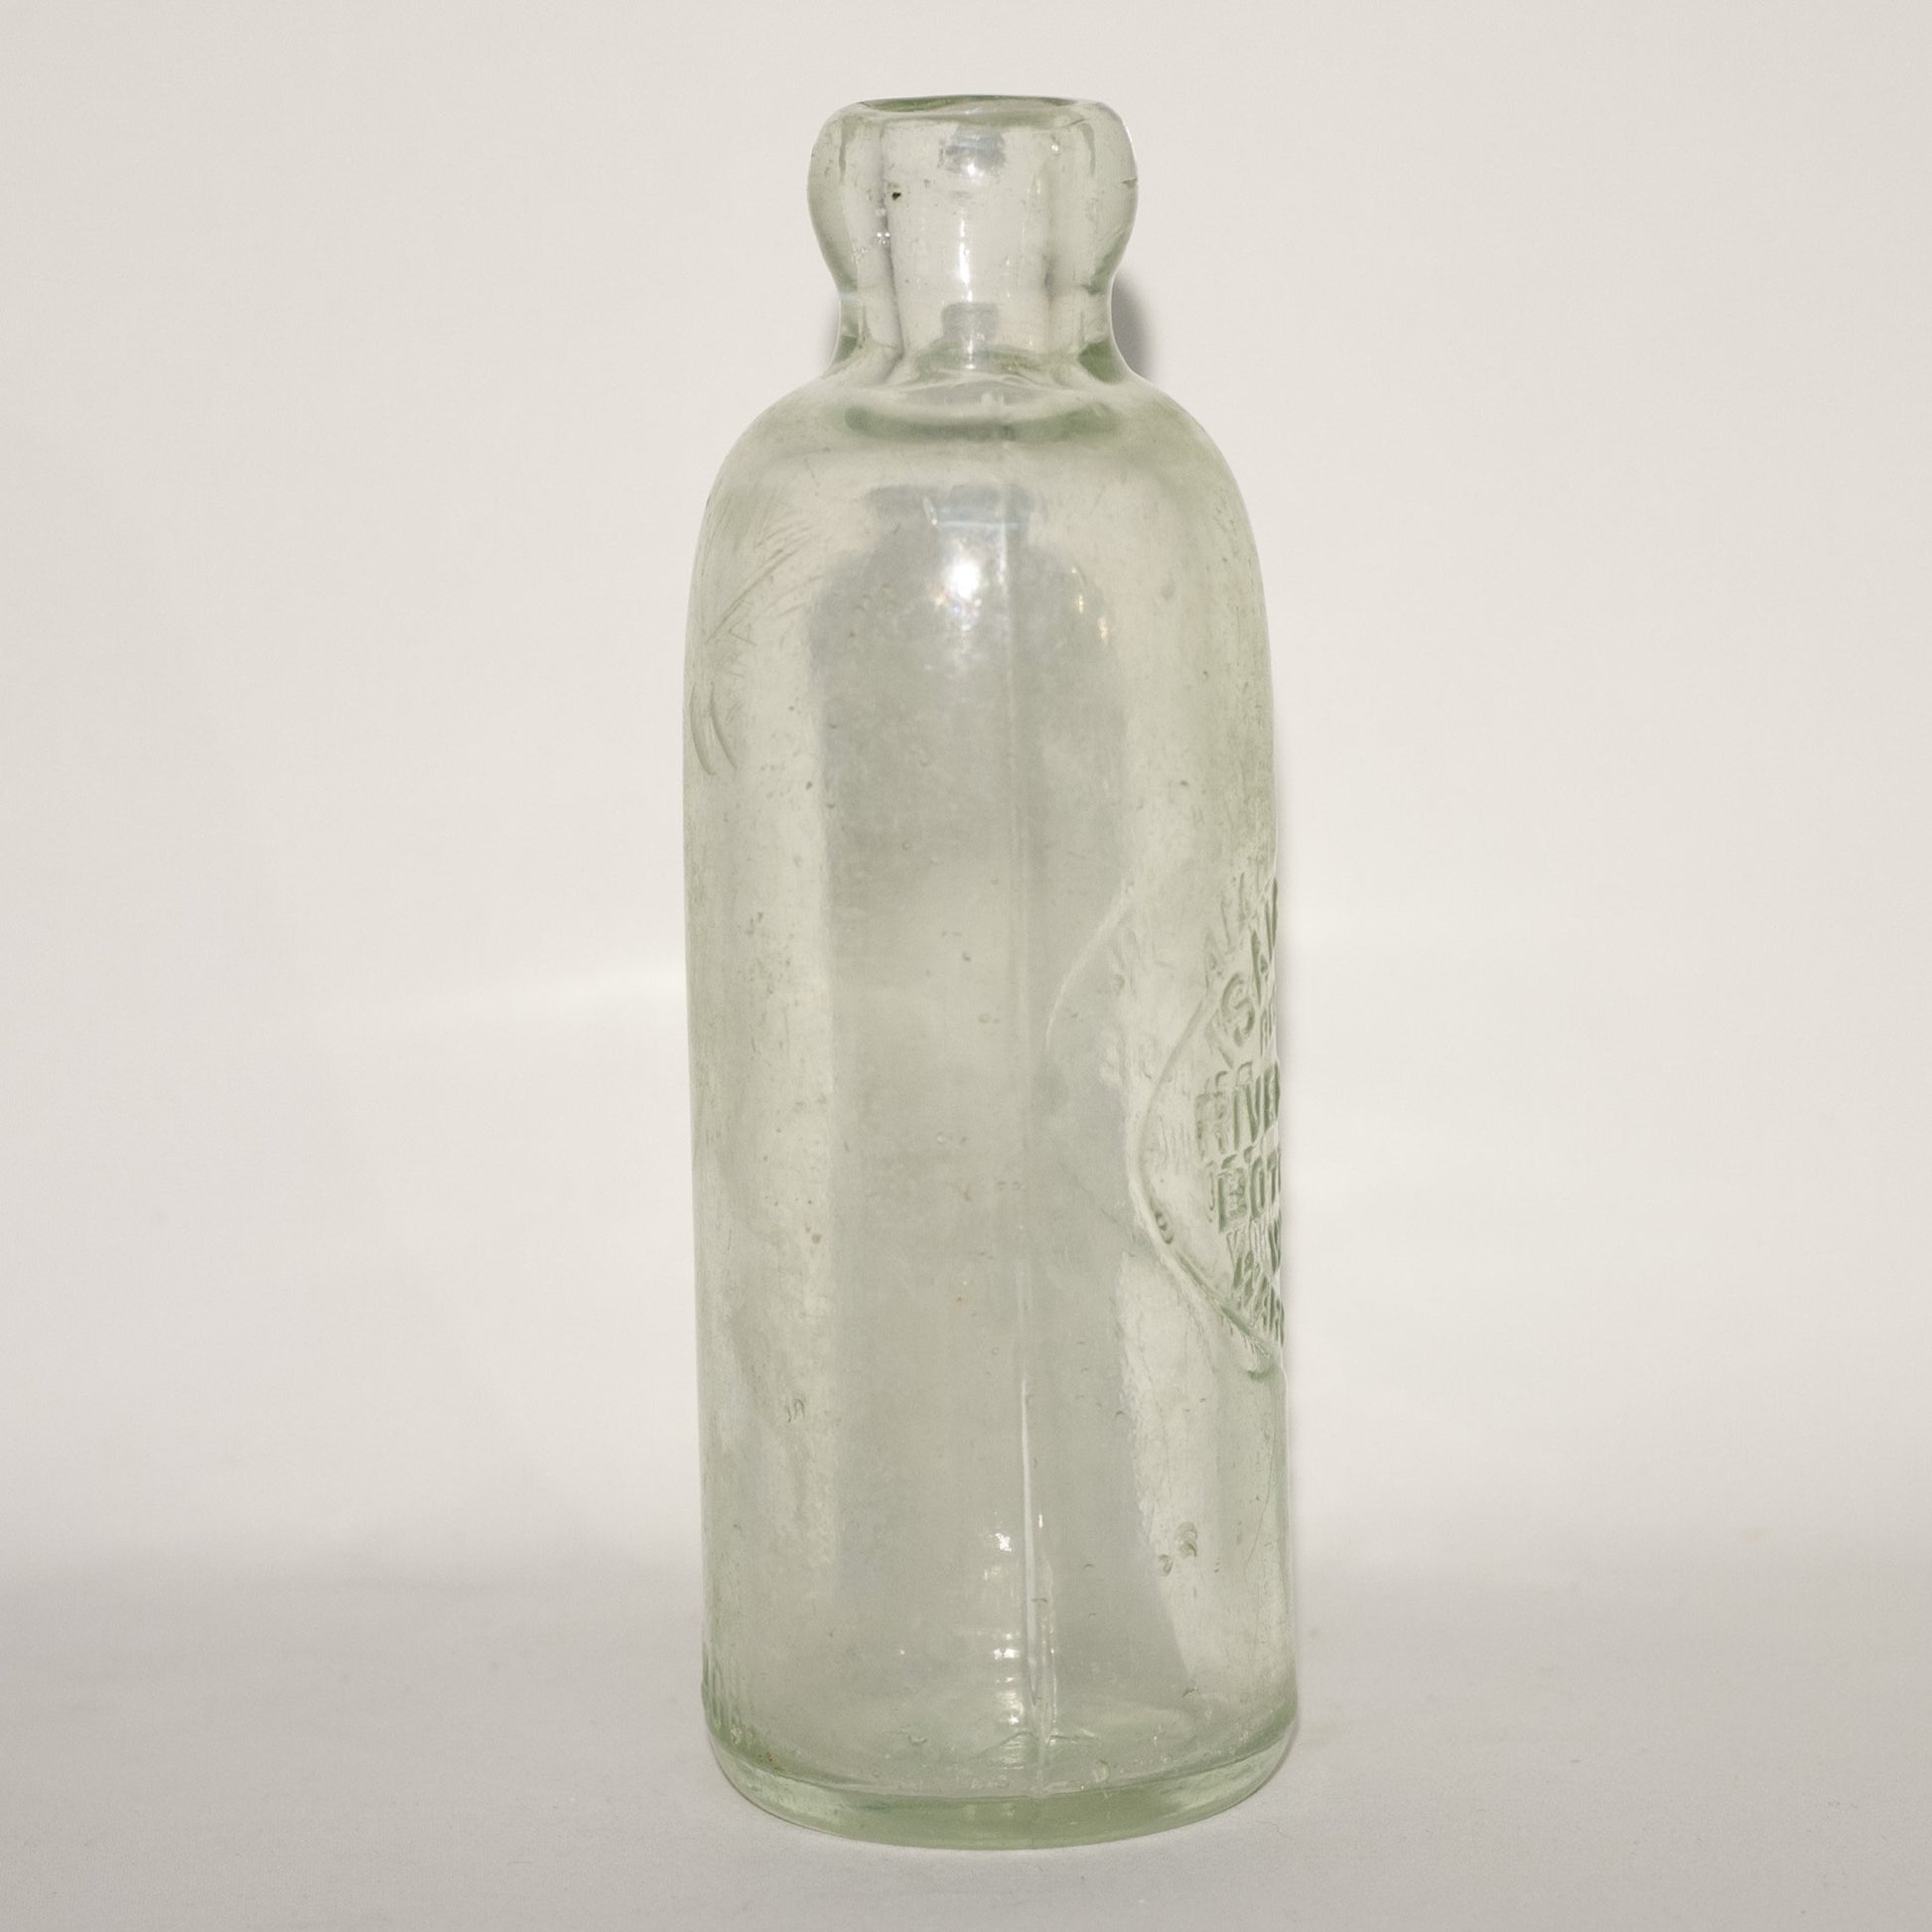 ISAIAH BUNN RIVERSIDE BOTTLING WORKS Warwick, NY Rare Hutchinson Bottle with Spelling Error Circa 1888 - 1893